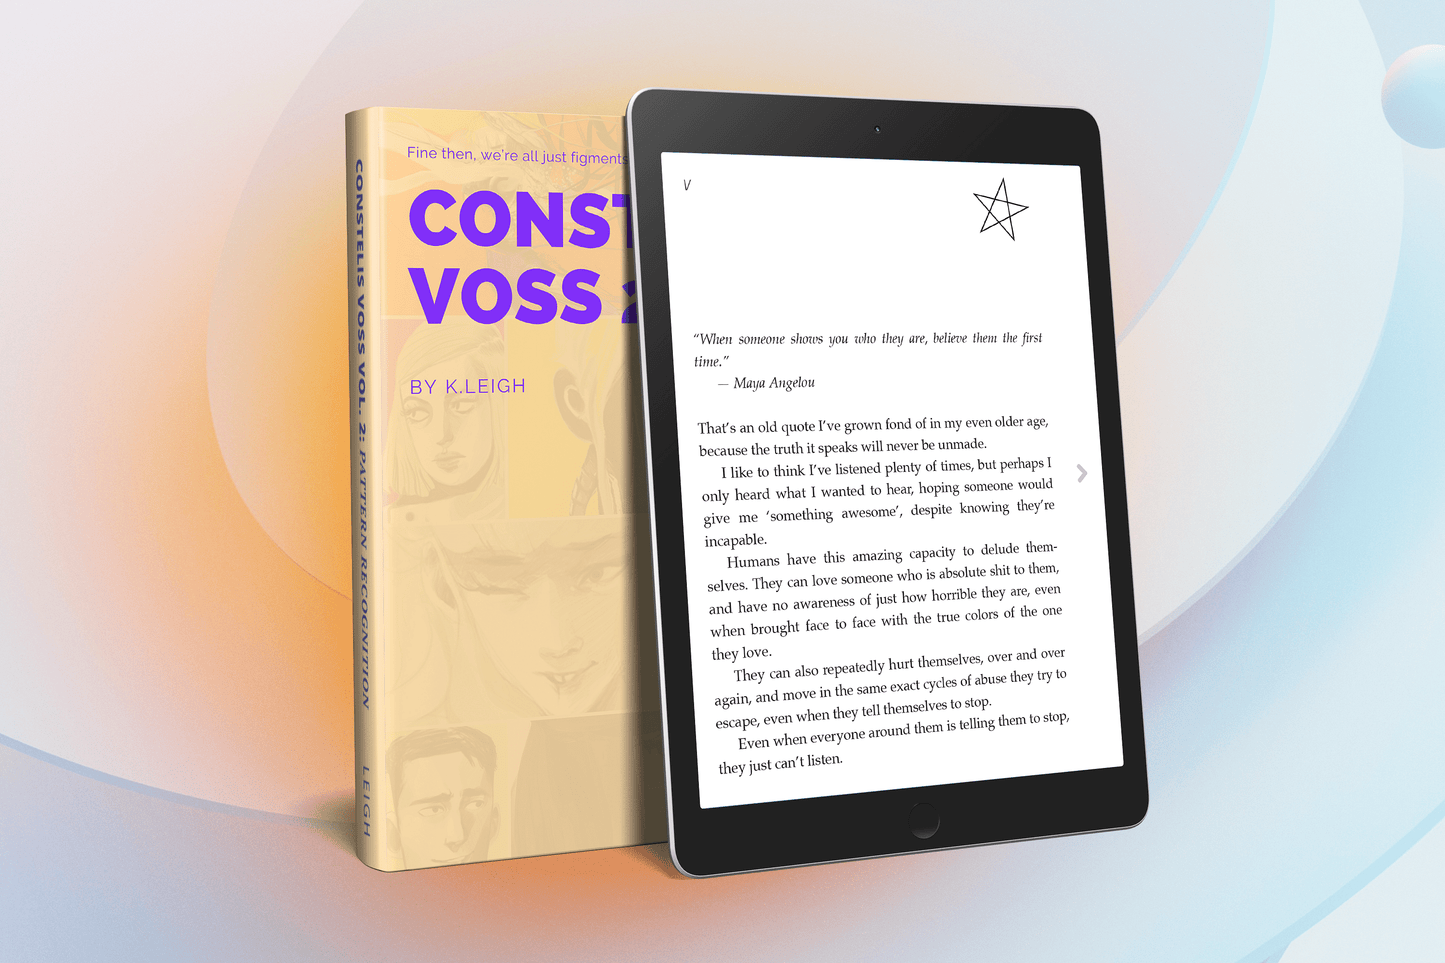 Constelis Voss Vol. 2 — eBook Direct